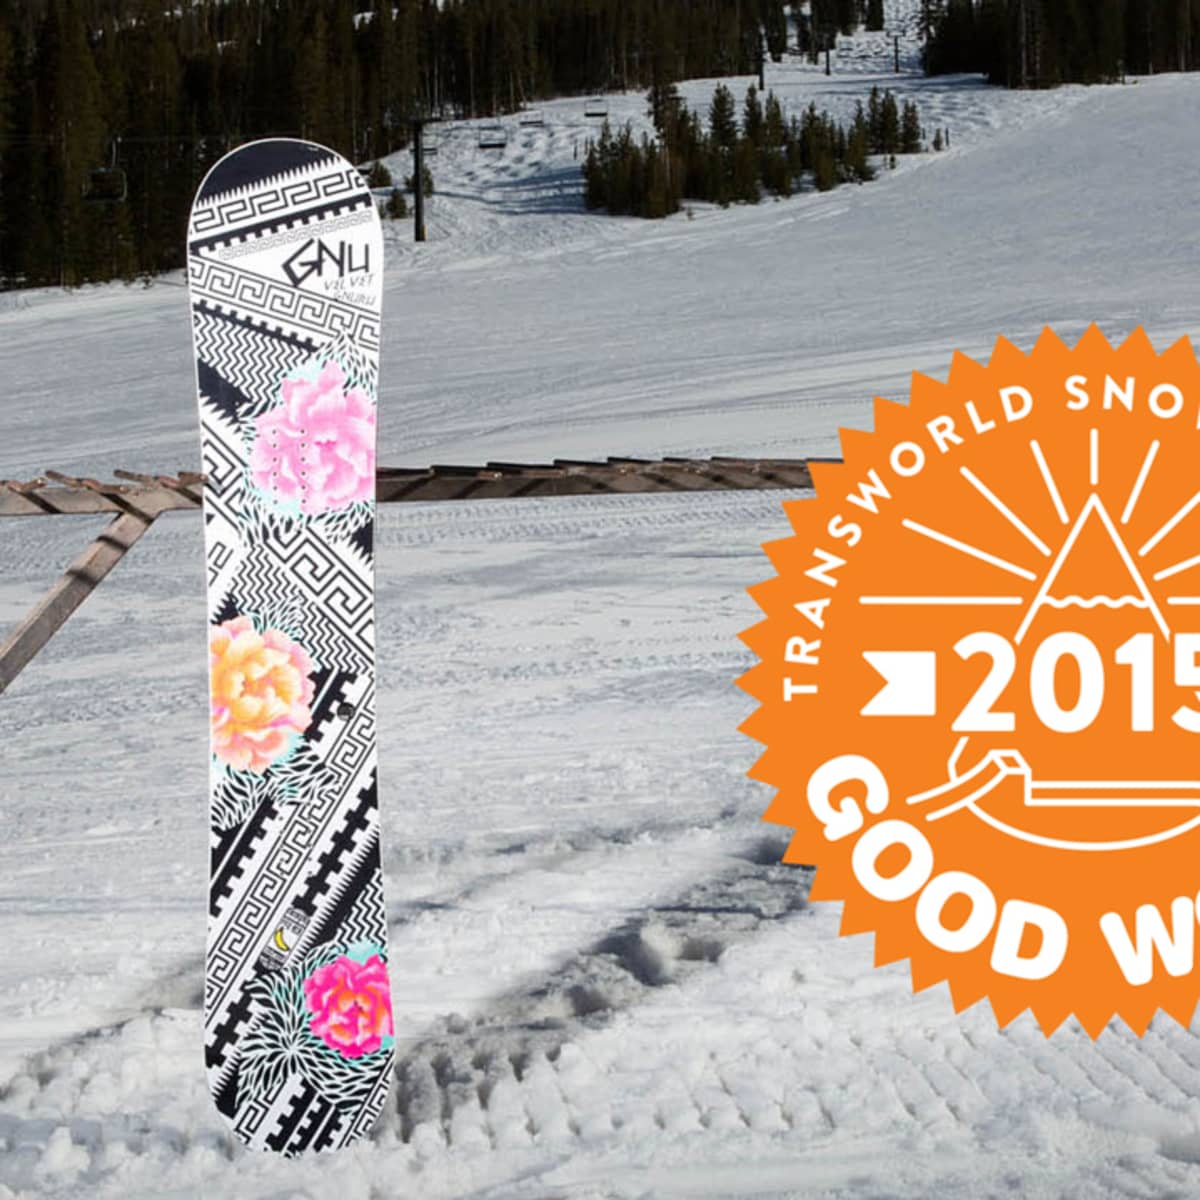 Gnu Velvet Gnuru Snowboard Review 2014-2015 - Snowboarder